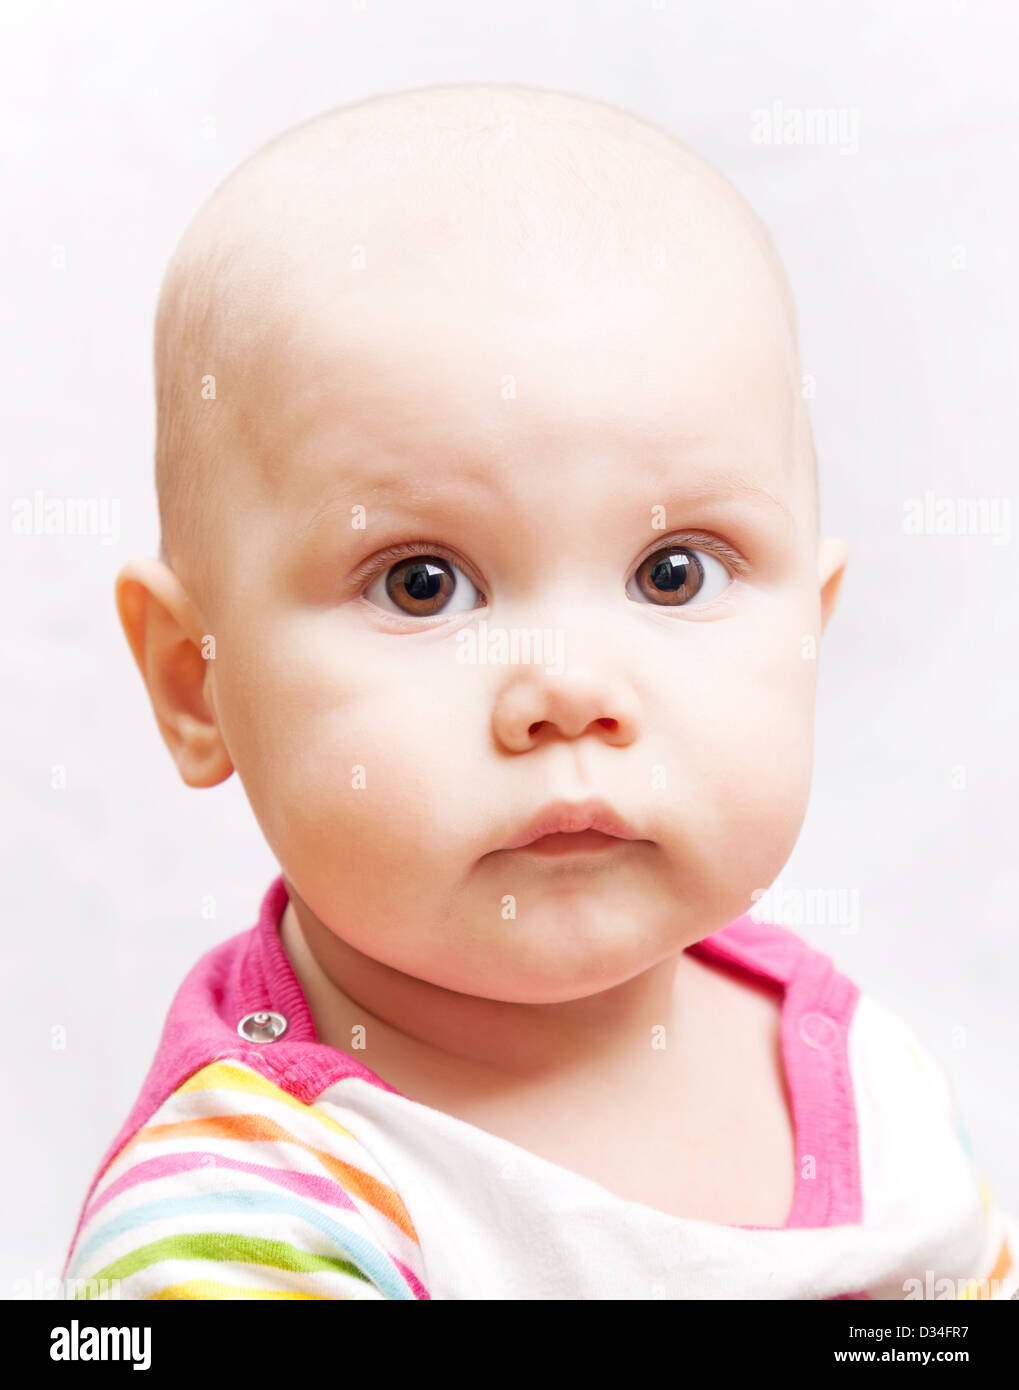 Kleine ruhige Brown eyed Baby Closeup Studioportrait Stockfoto